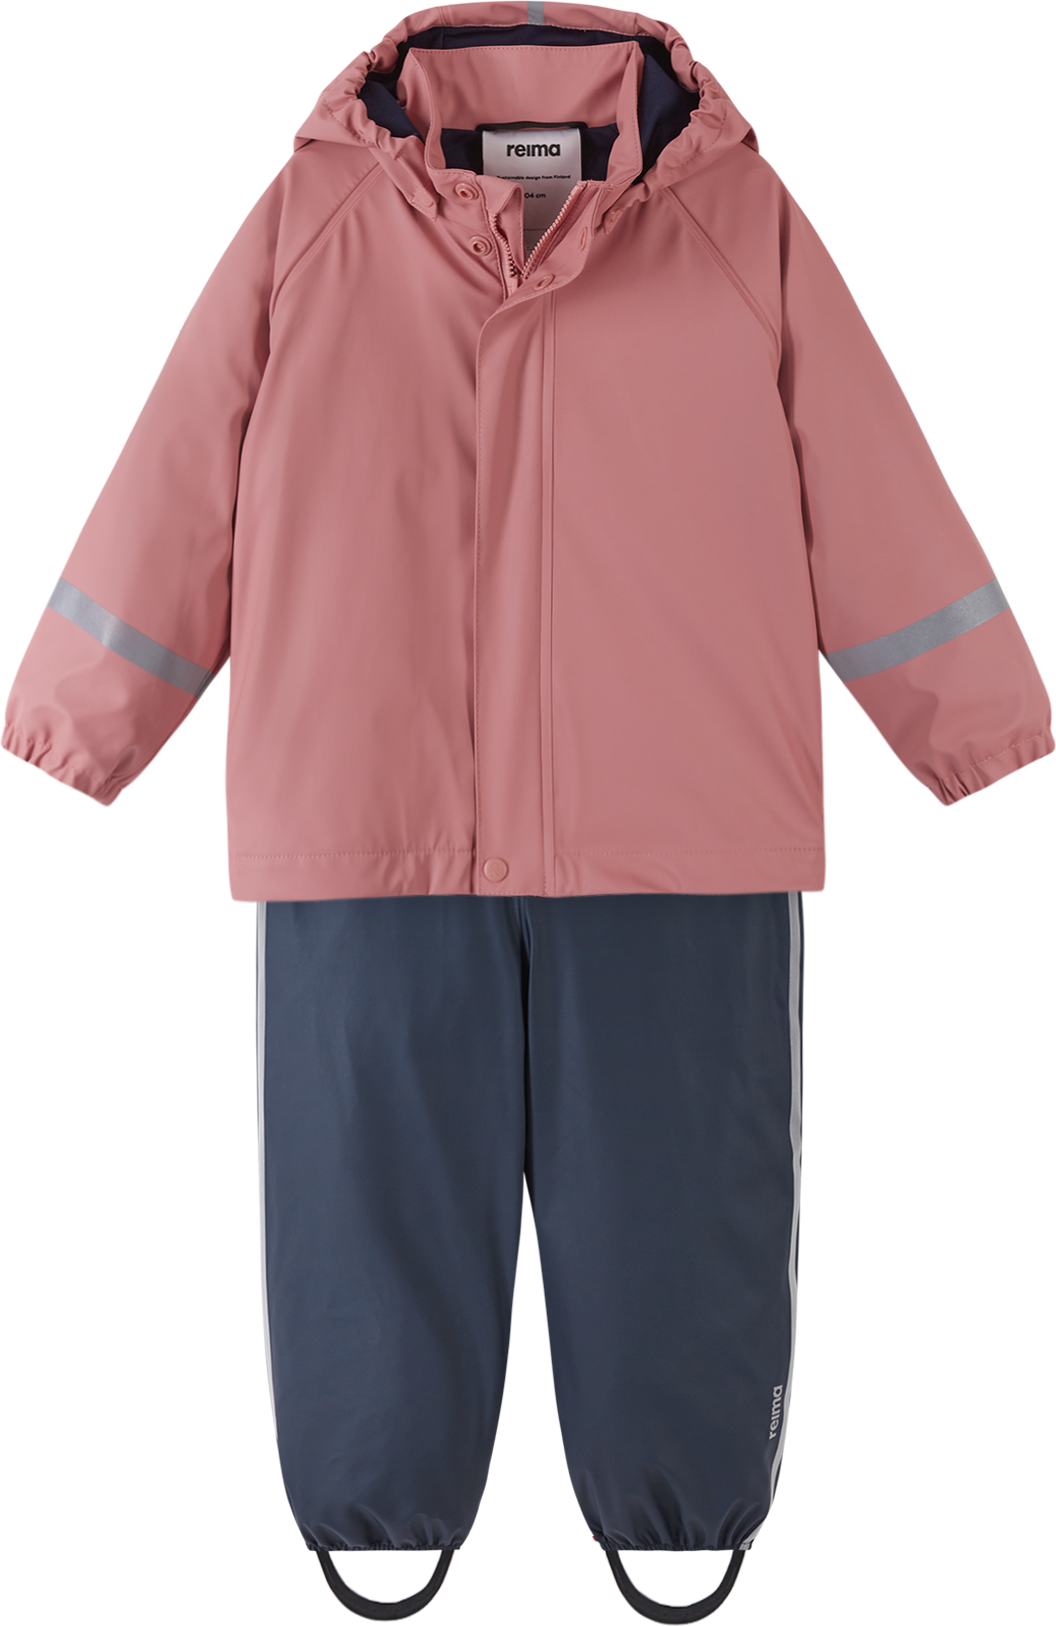 Reima Reima Kids' Tipotella Rain Outfit Rose Blush 92 cm, Rose Blush